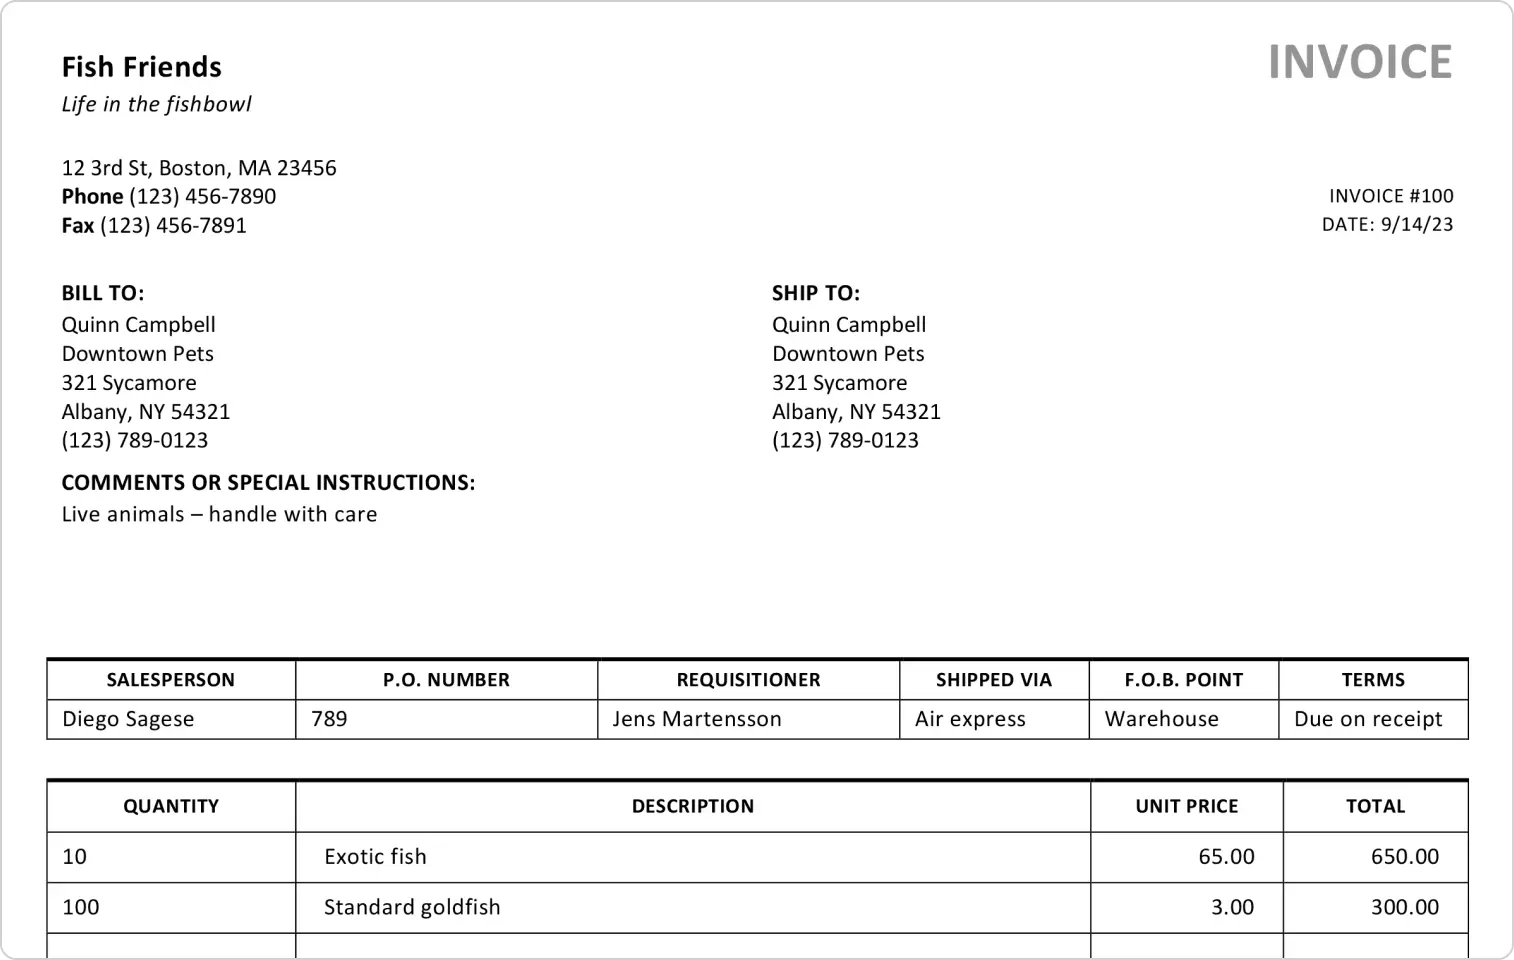 A screenshot of the Microsoft Create sales invoice template